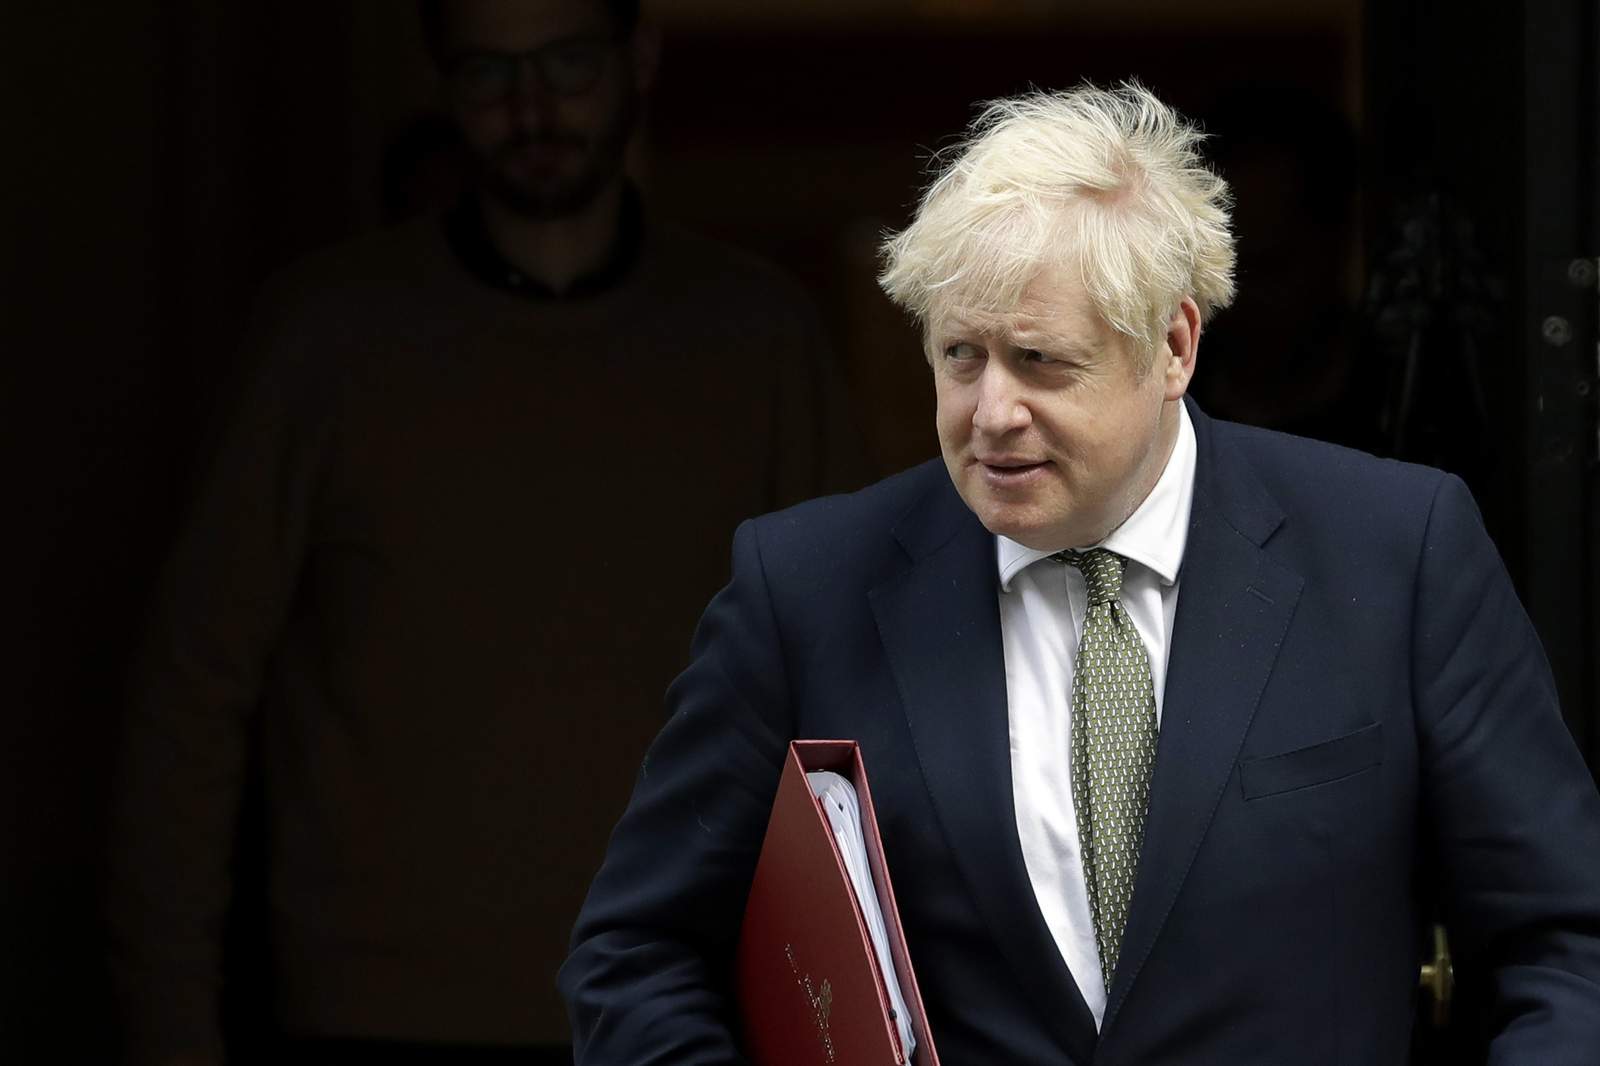 As virus surges, isolated UK leader Johnson faces many foes